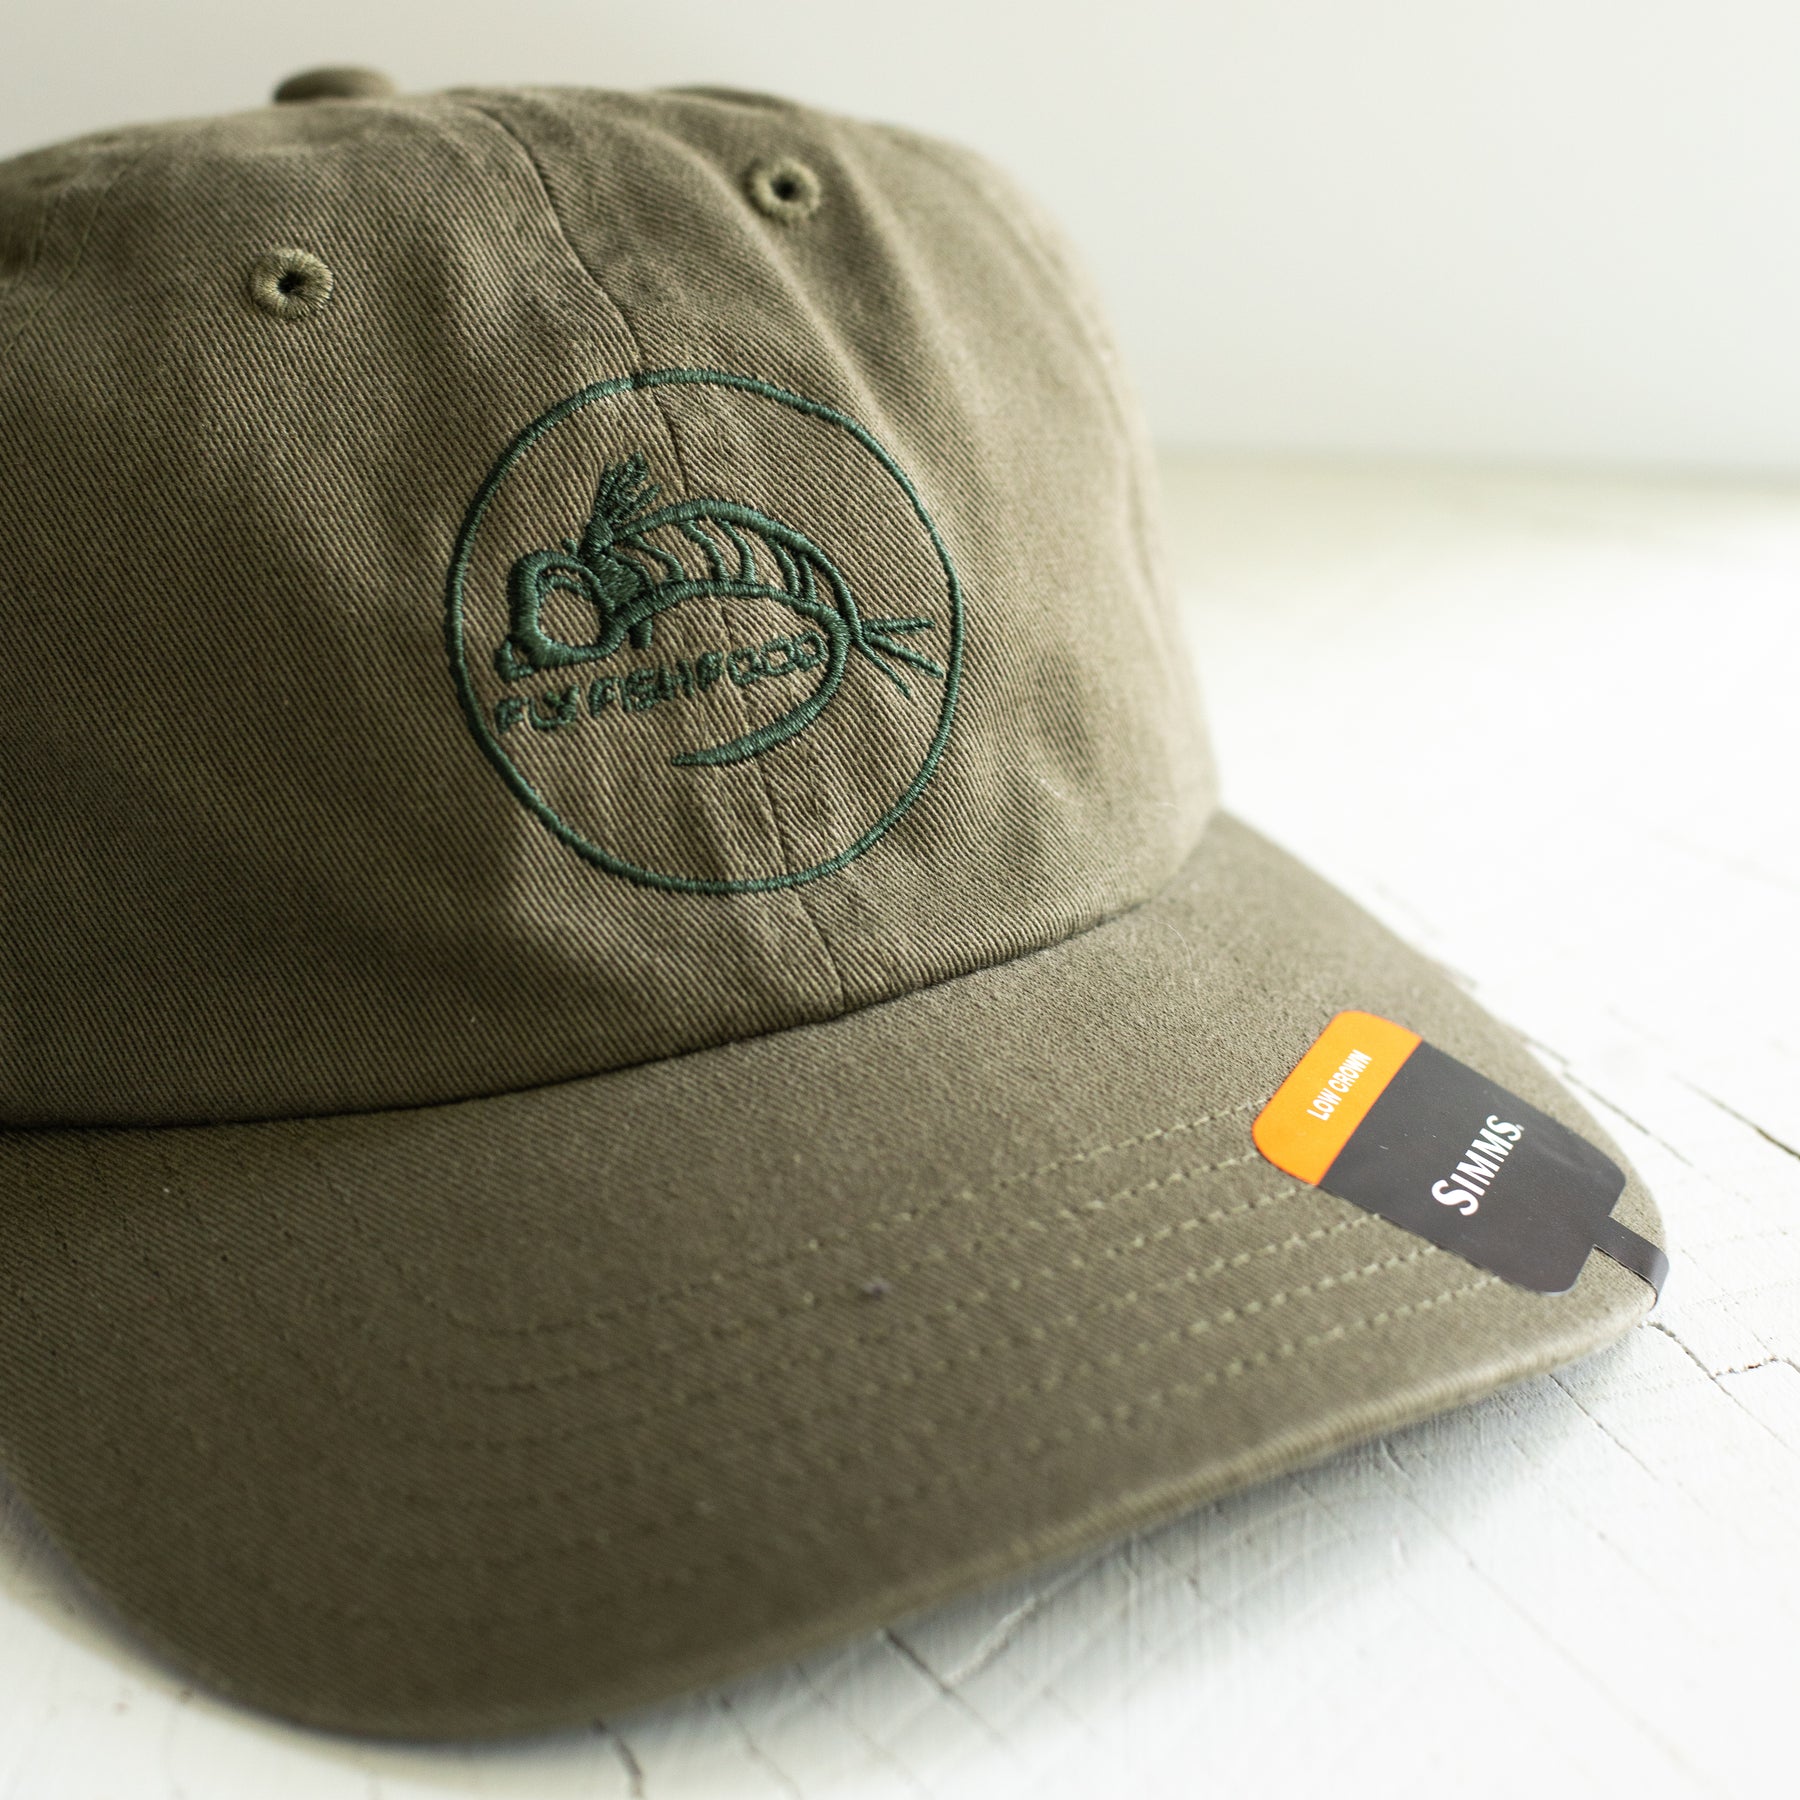 Simms Fishing Simms Oil Cloth Cap - Low Crown - Black - Salmon River Fly Box